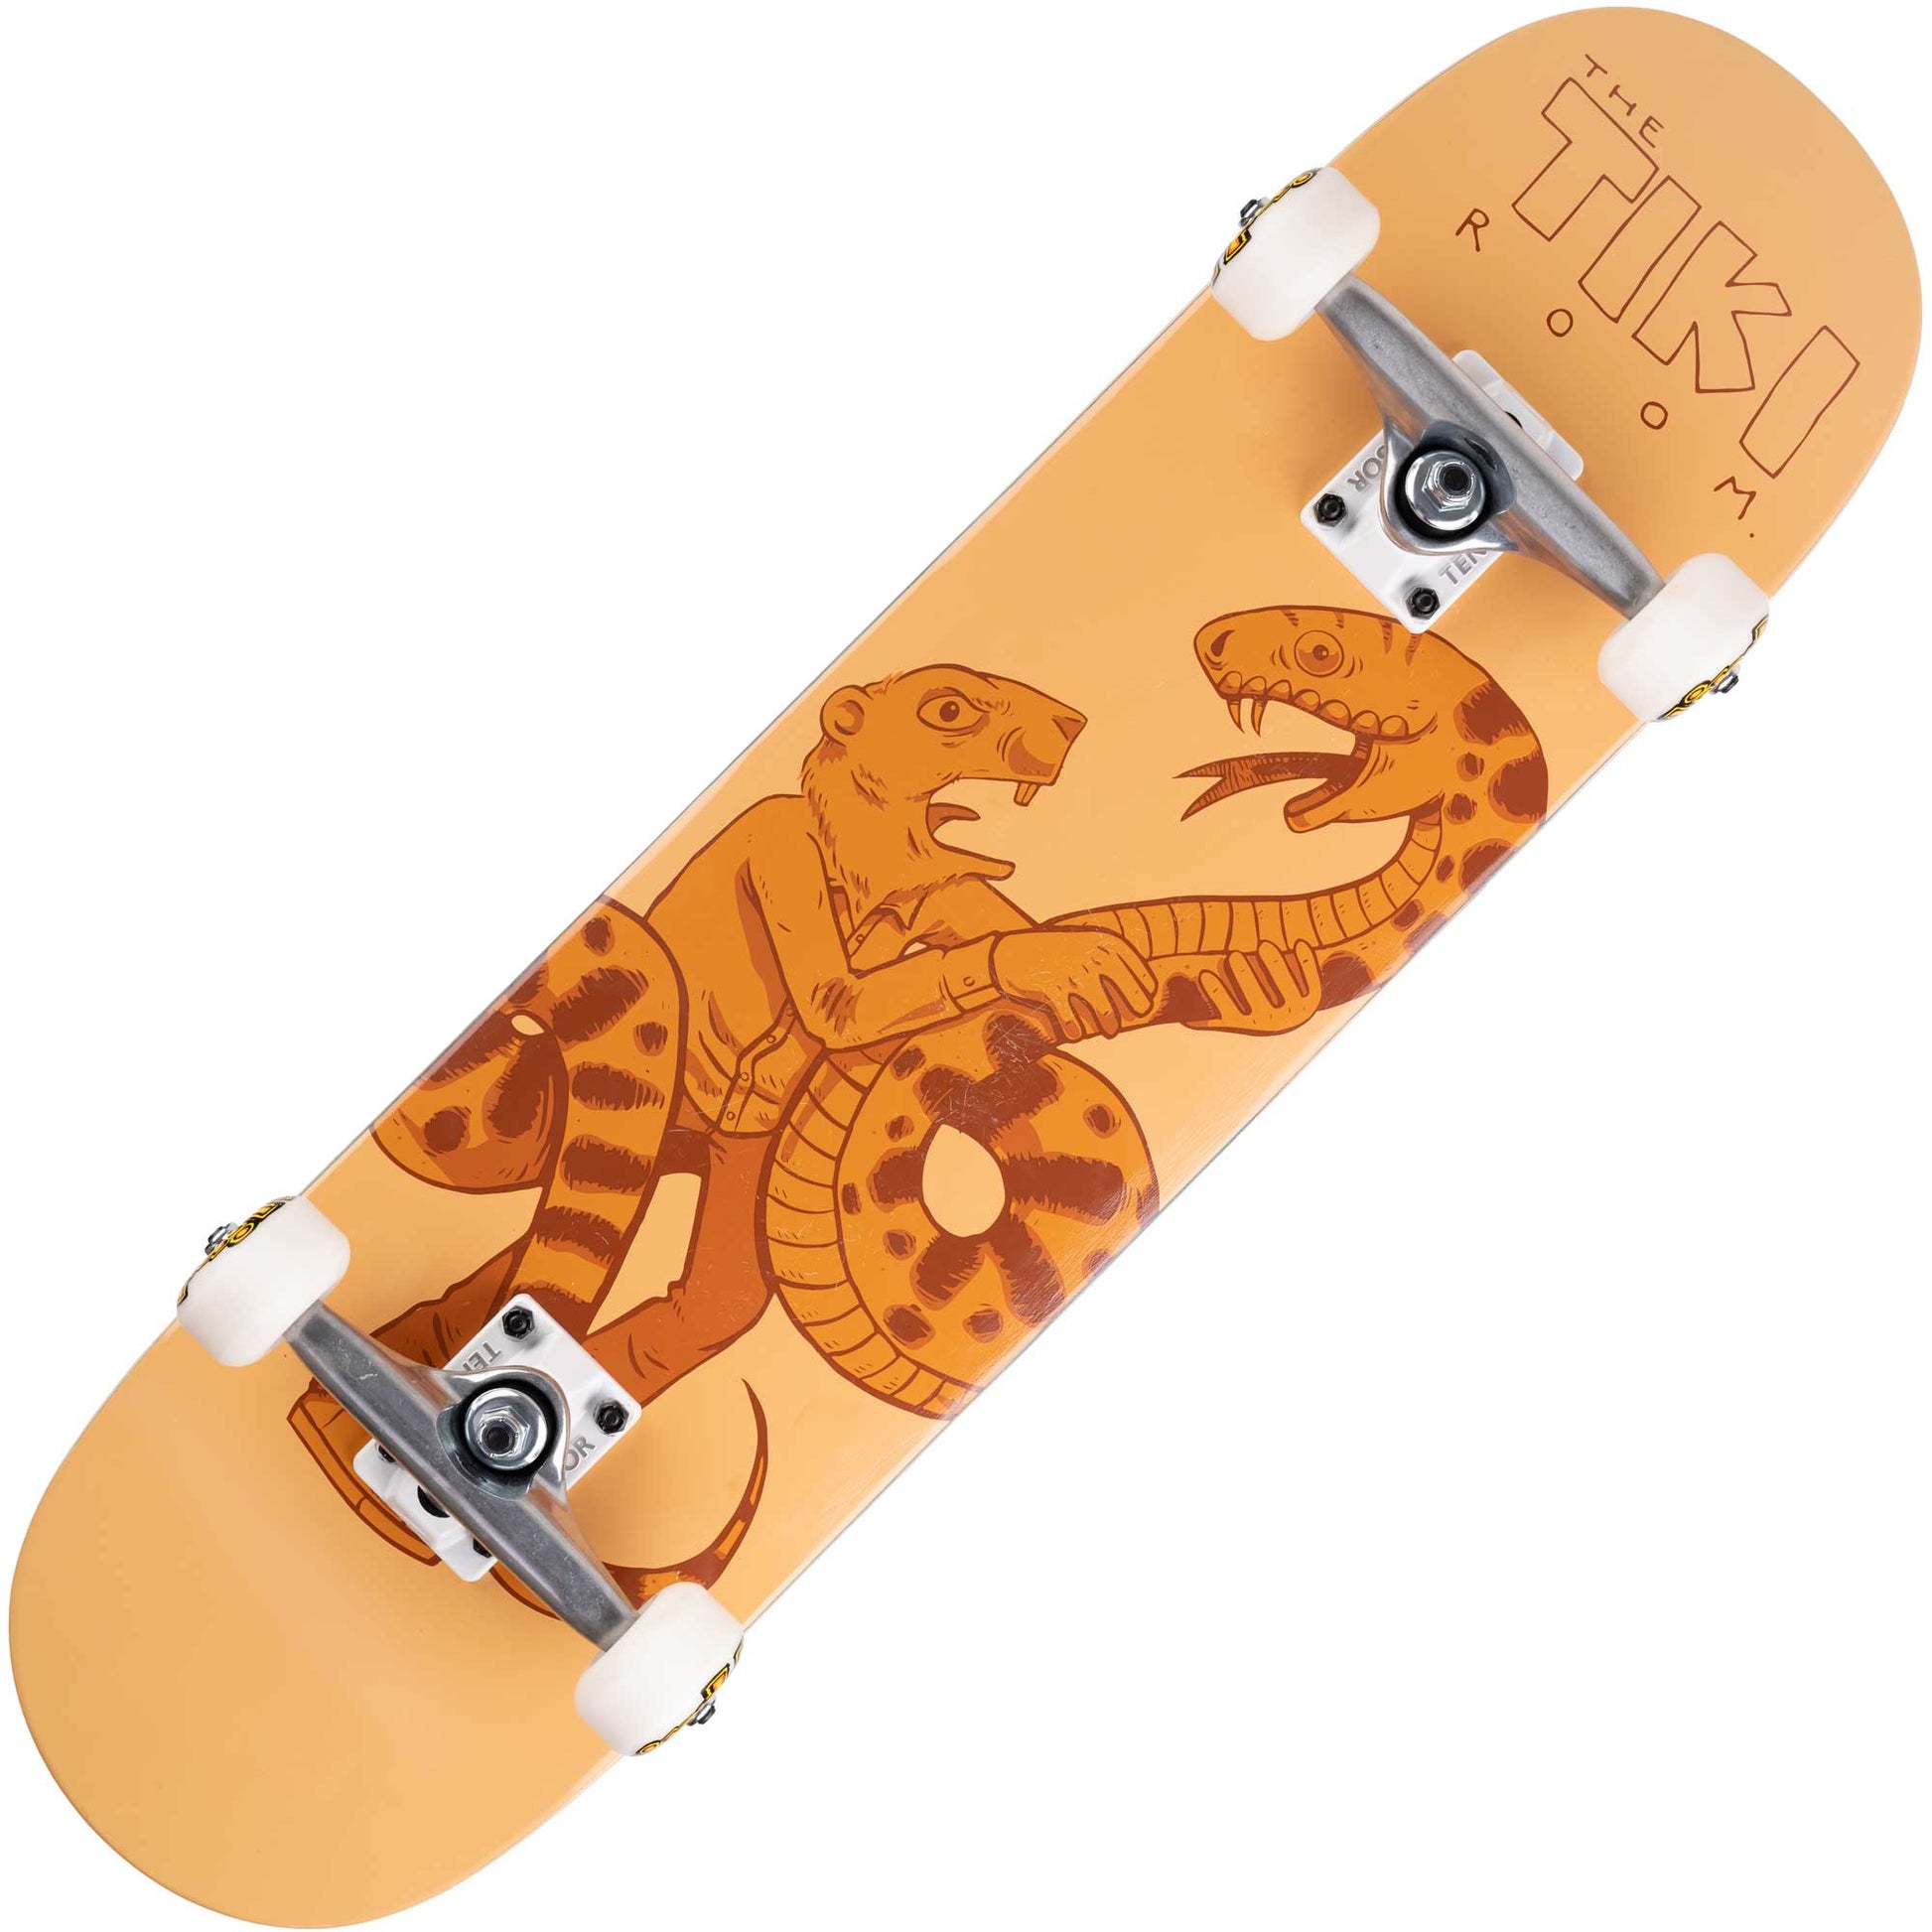 Tiki Room Snake And Gopher Reissue Complete (8.0”, orange) - Tiki Room Skateboards - 1